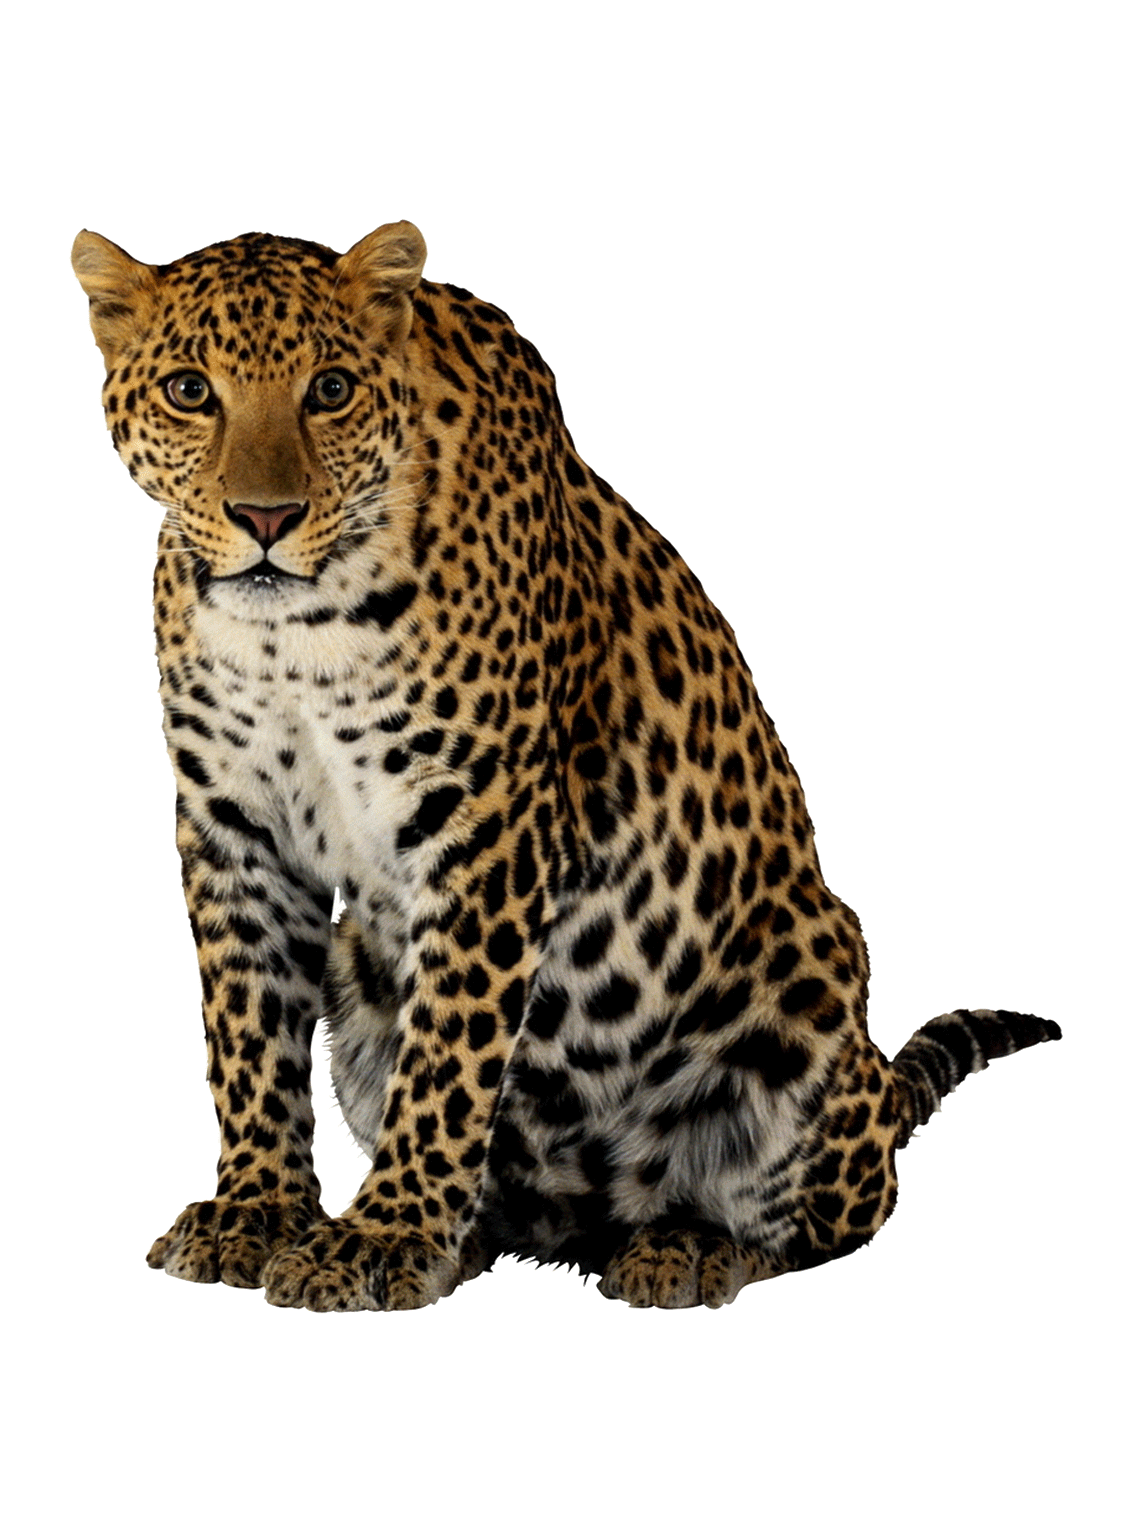 Leopard Cheetah Lion - Cheetah image png download - 1127*1524 - Free ...